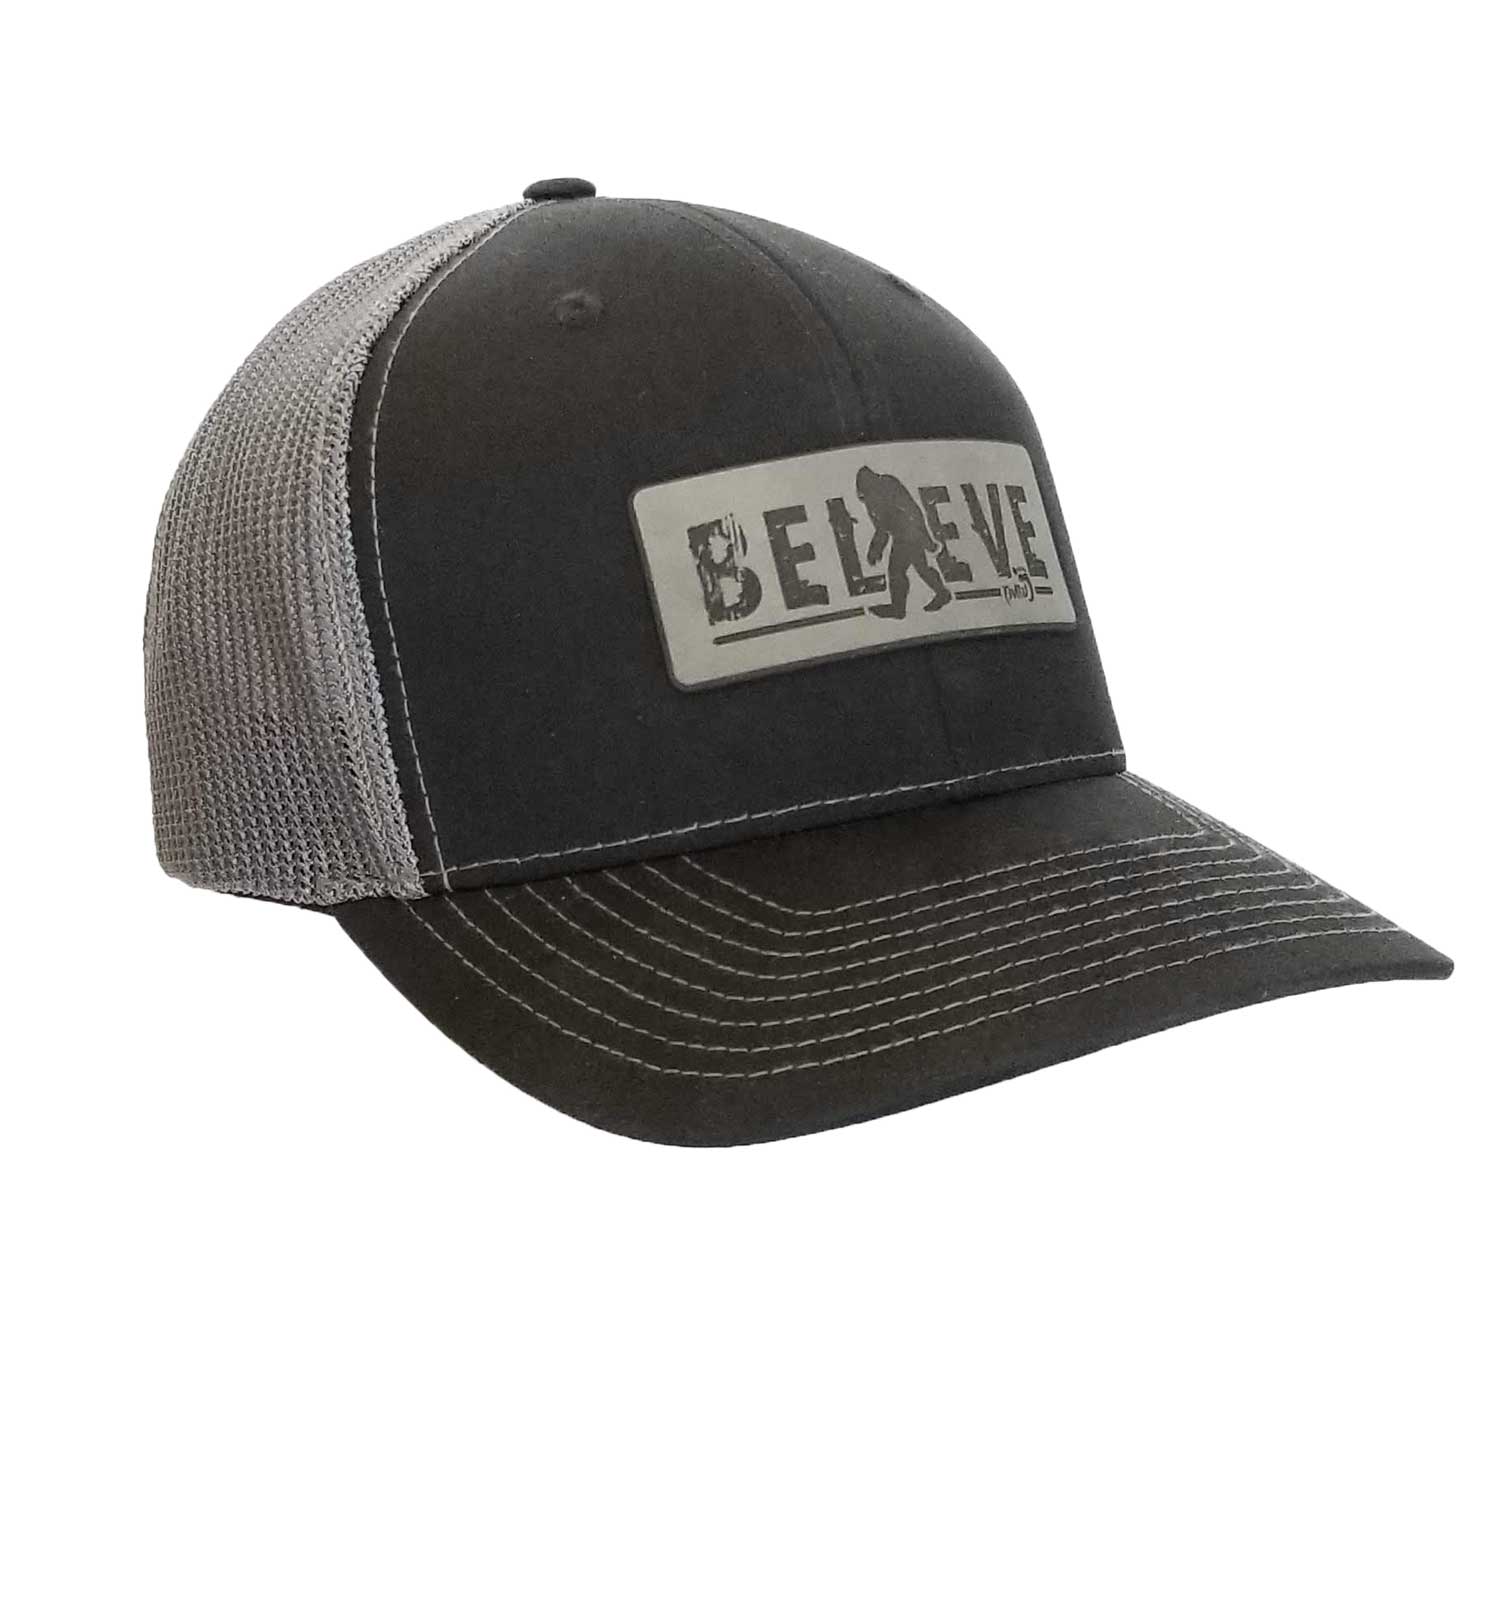 Bigfoot Believe Trucker Hat - R Flex Black Grey - Right